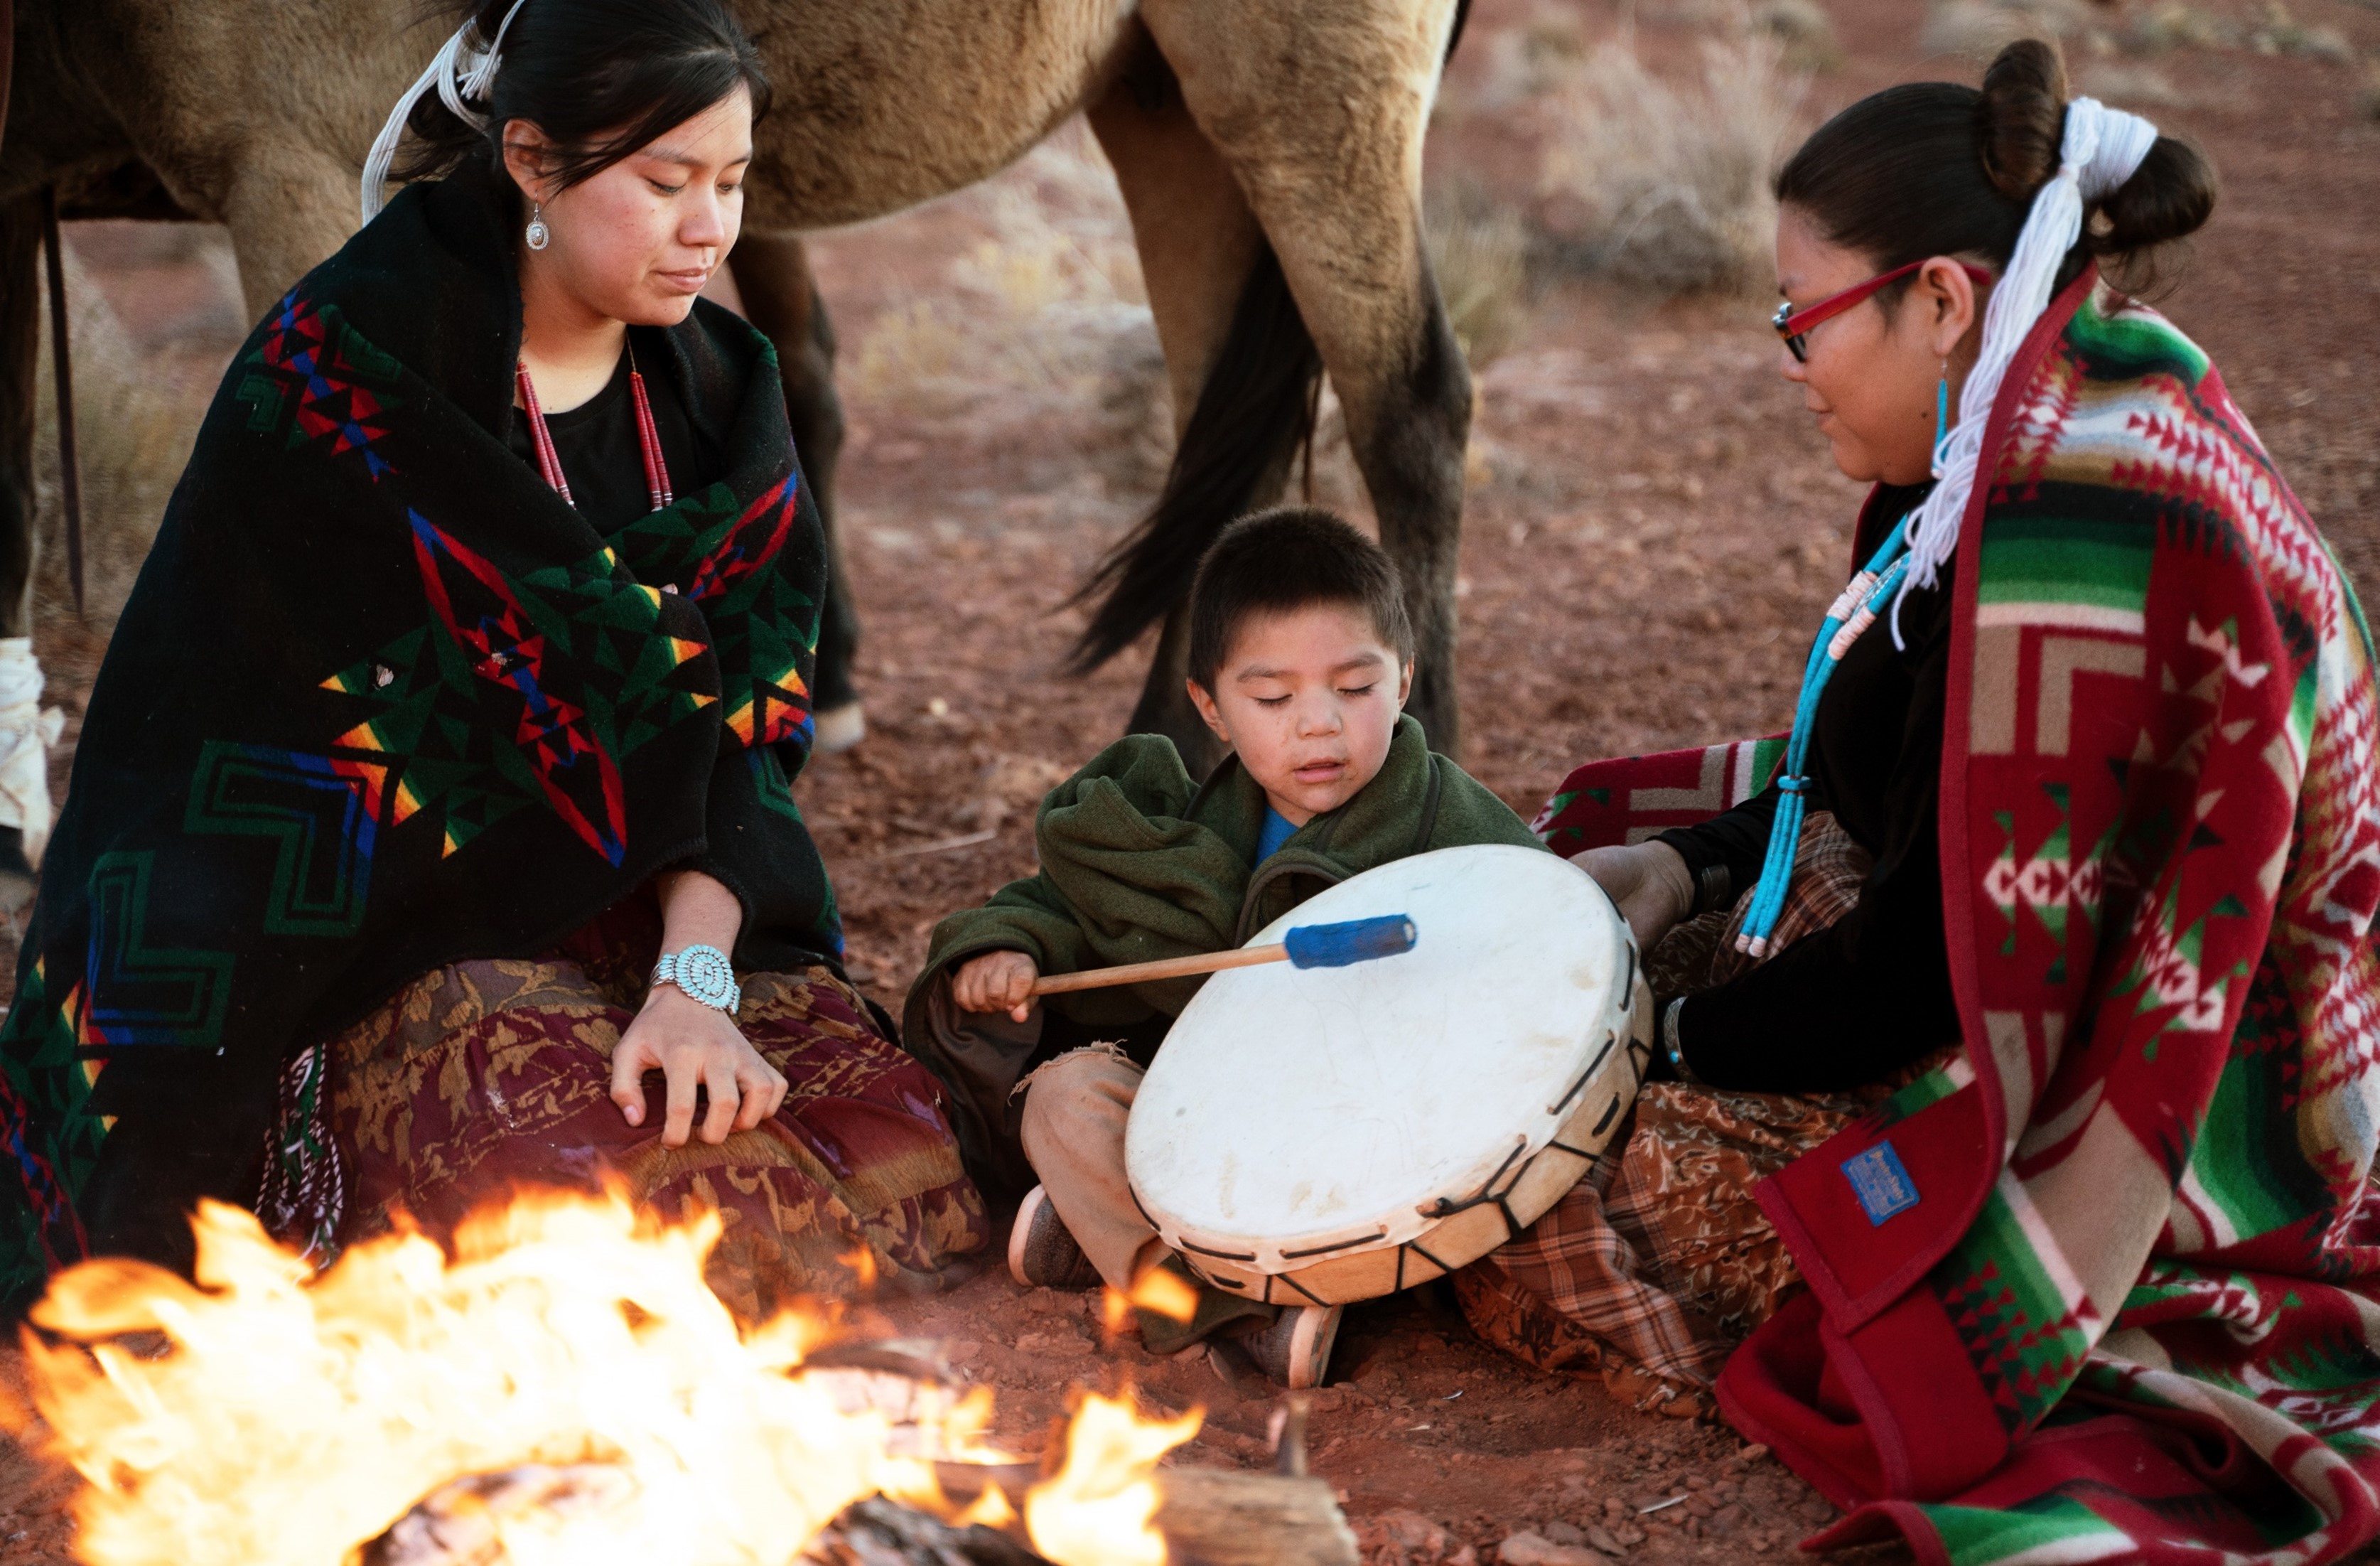 Native American grandmother teaching grandson to play drum